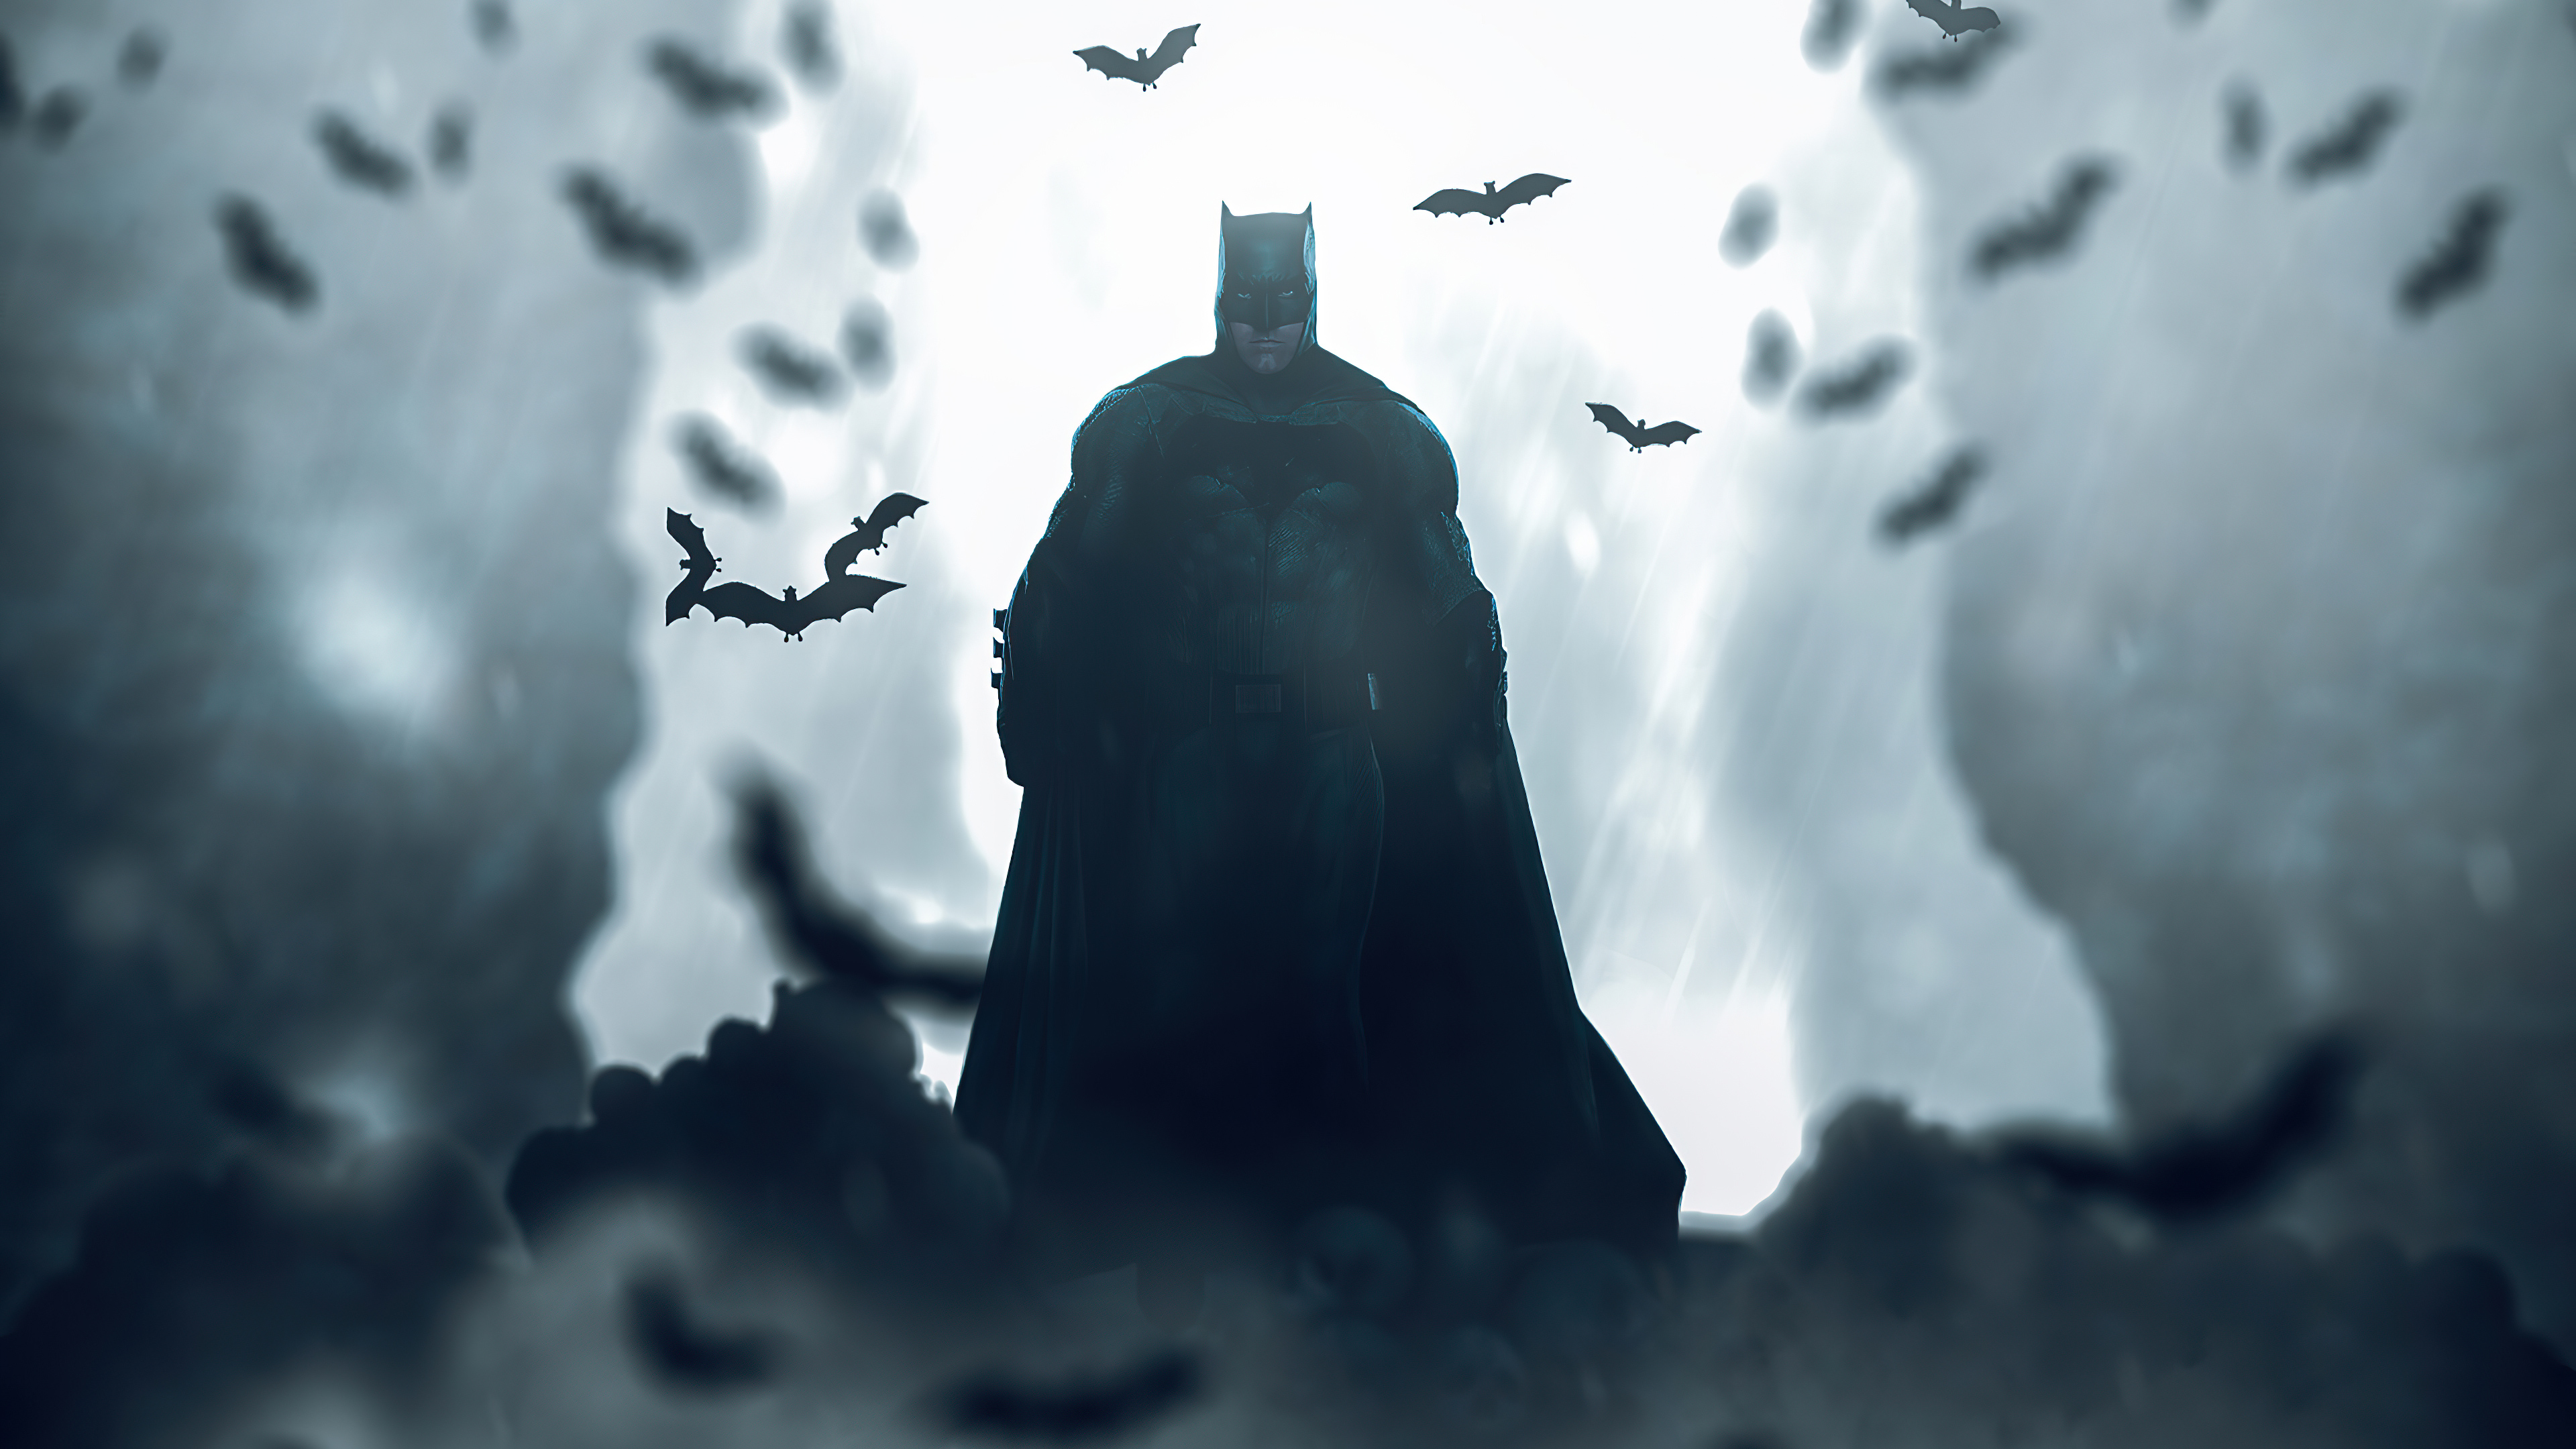 Batman Bats 4k 2020, HD Superheroes, 4k Wallpapers, Images, Backgrounds,  Photos and Pictures